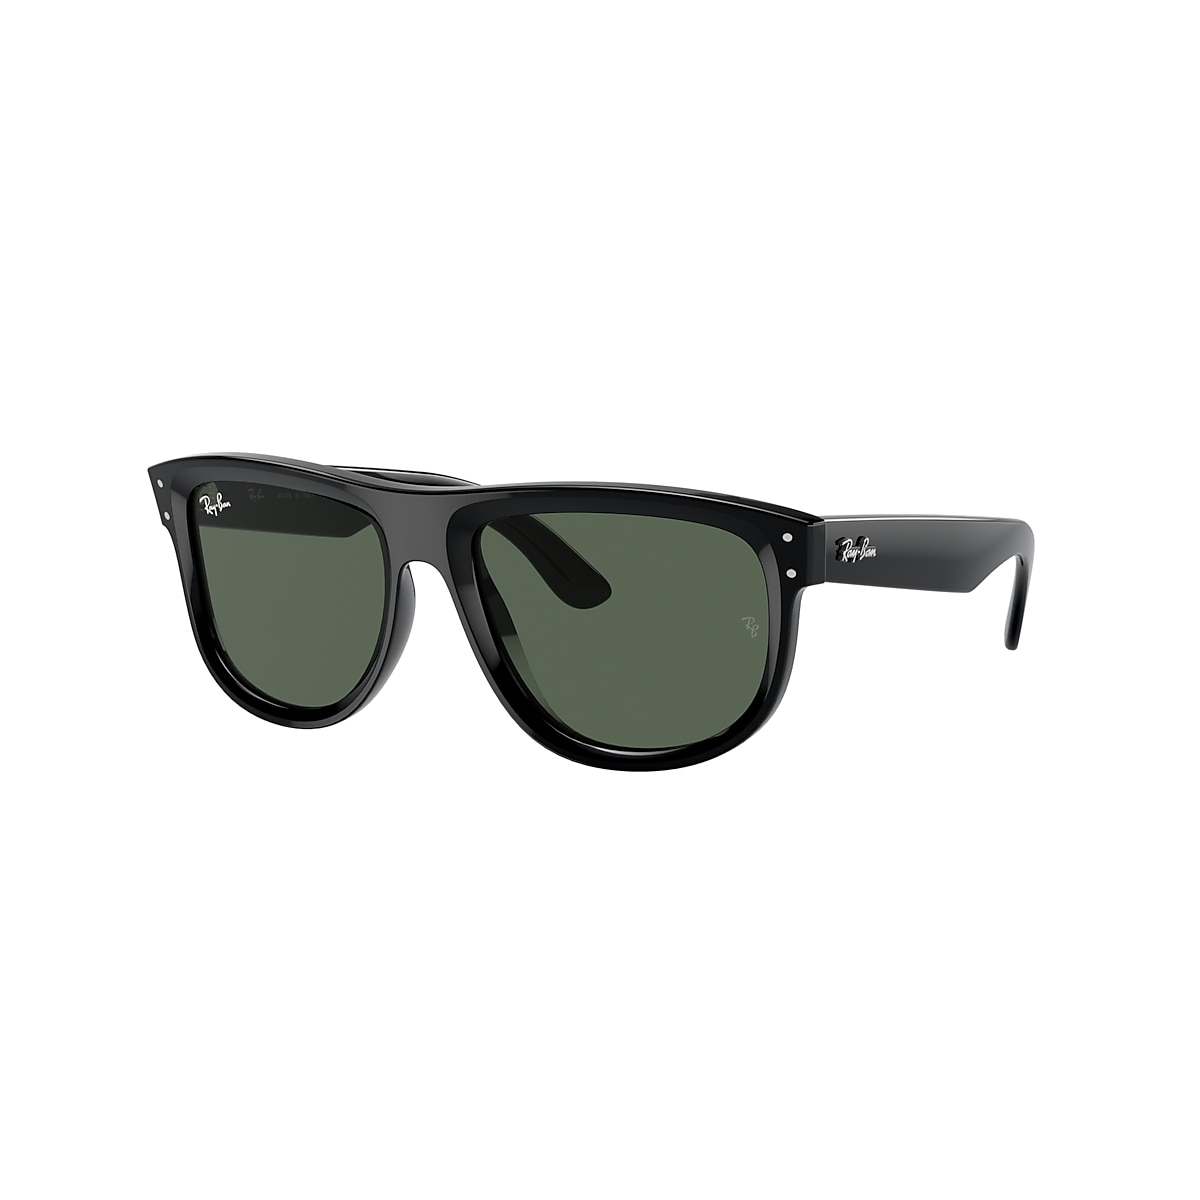 BOYFRIEND REVERSE Sunglasses in Black and Green - RBR0501S